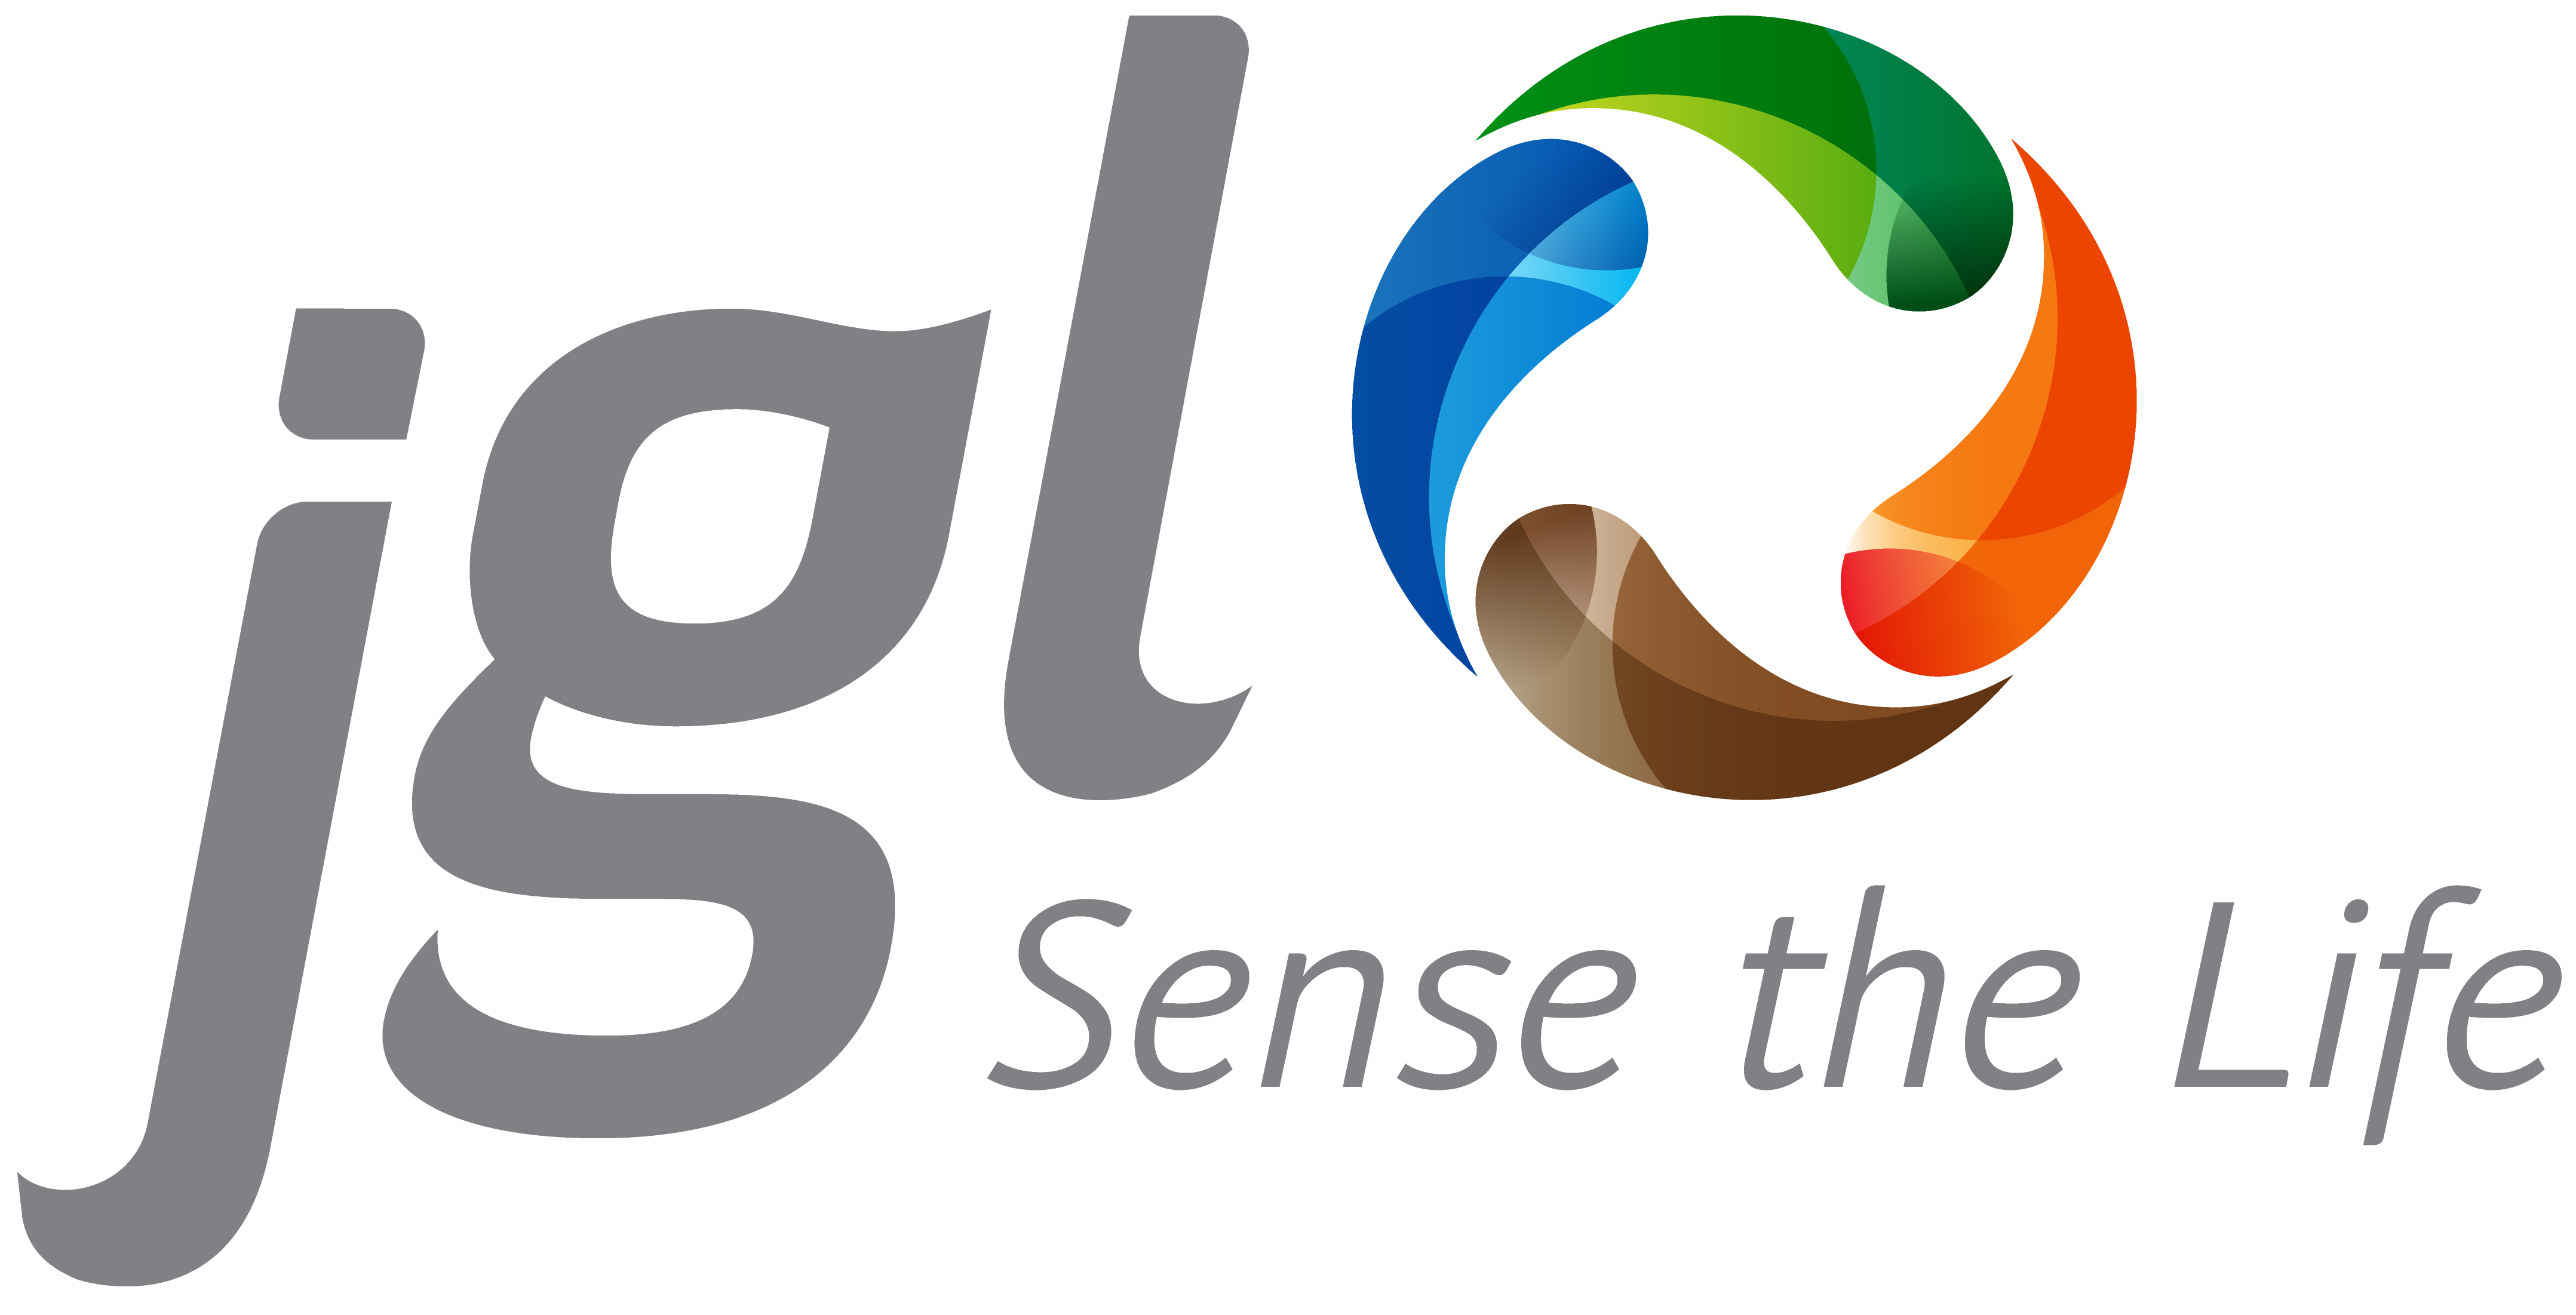 logo-jgl